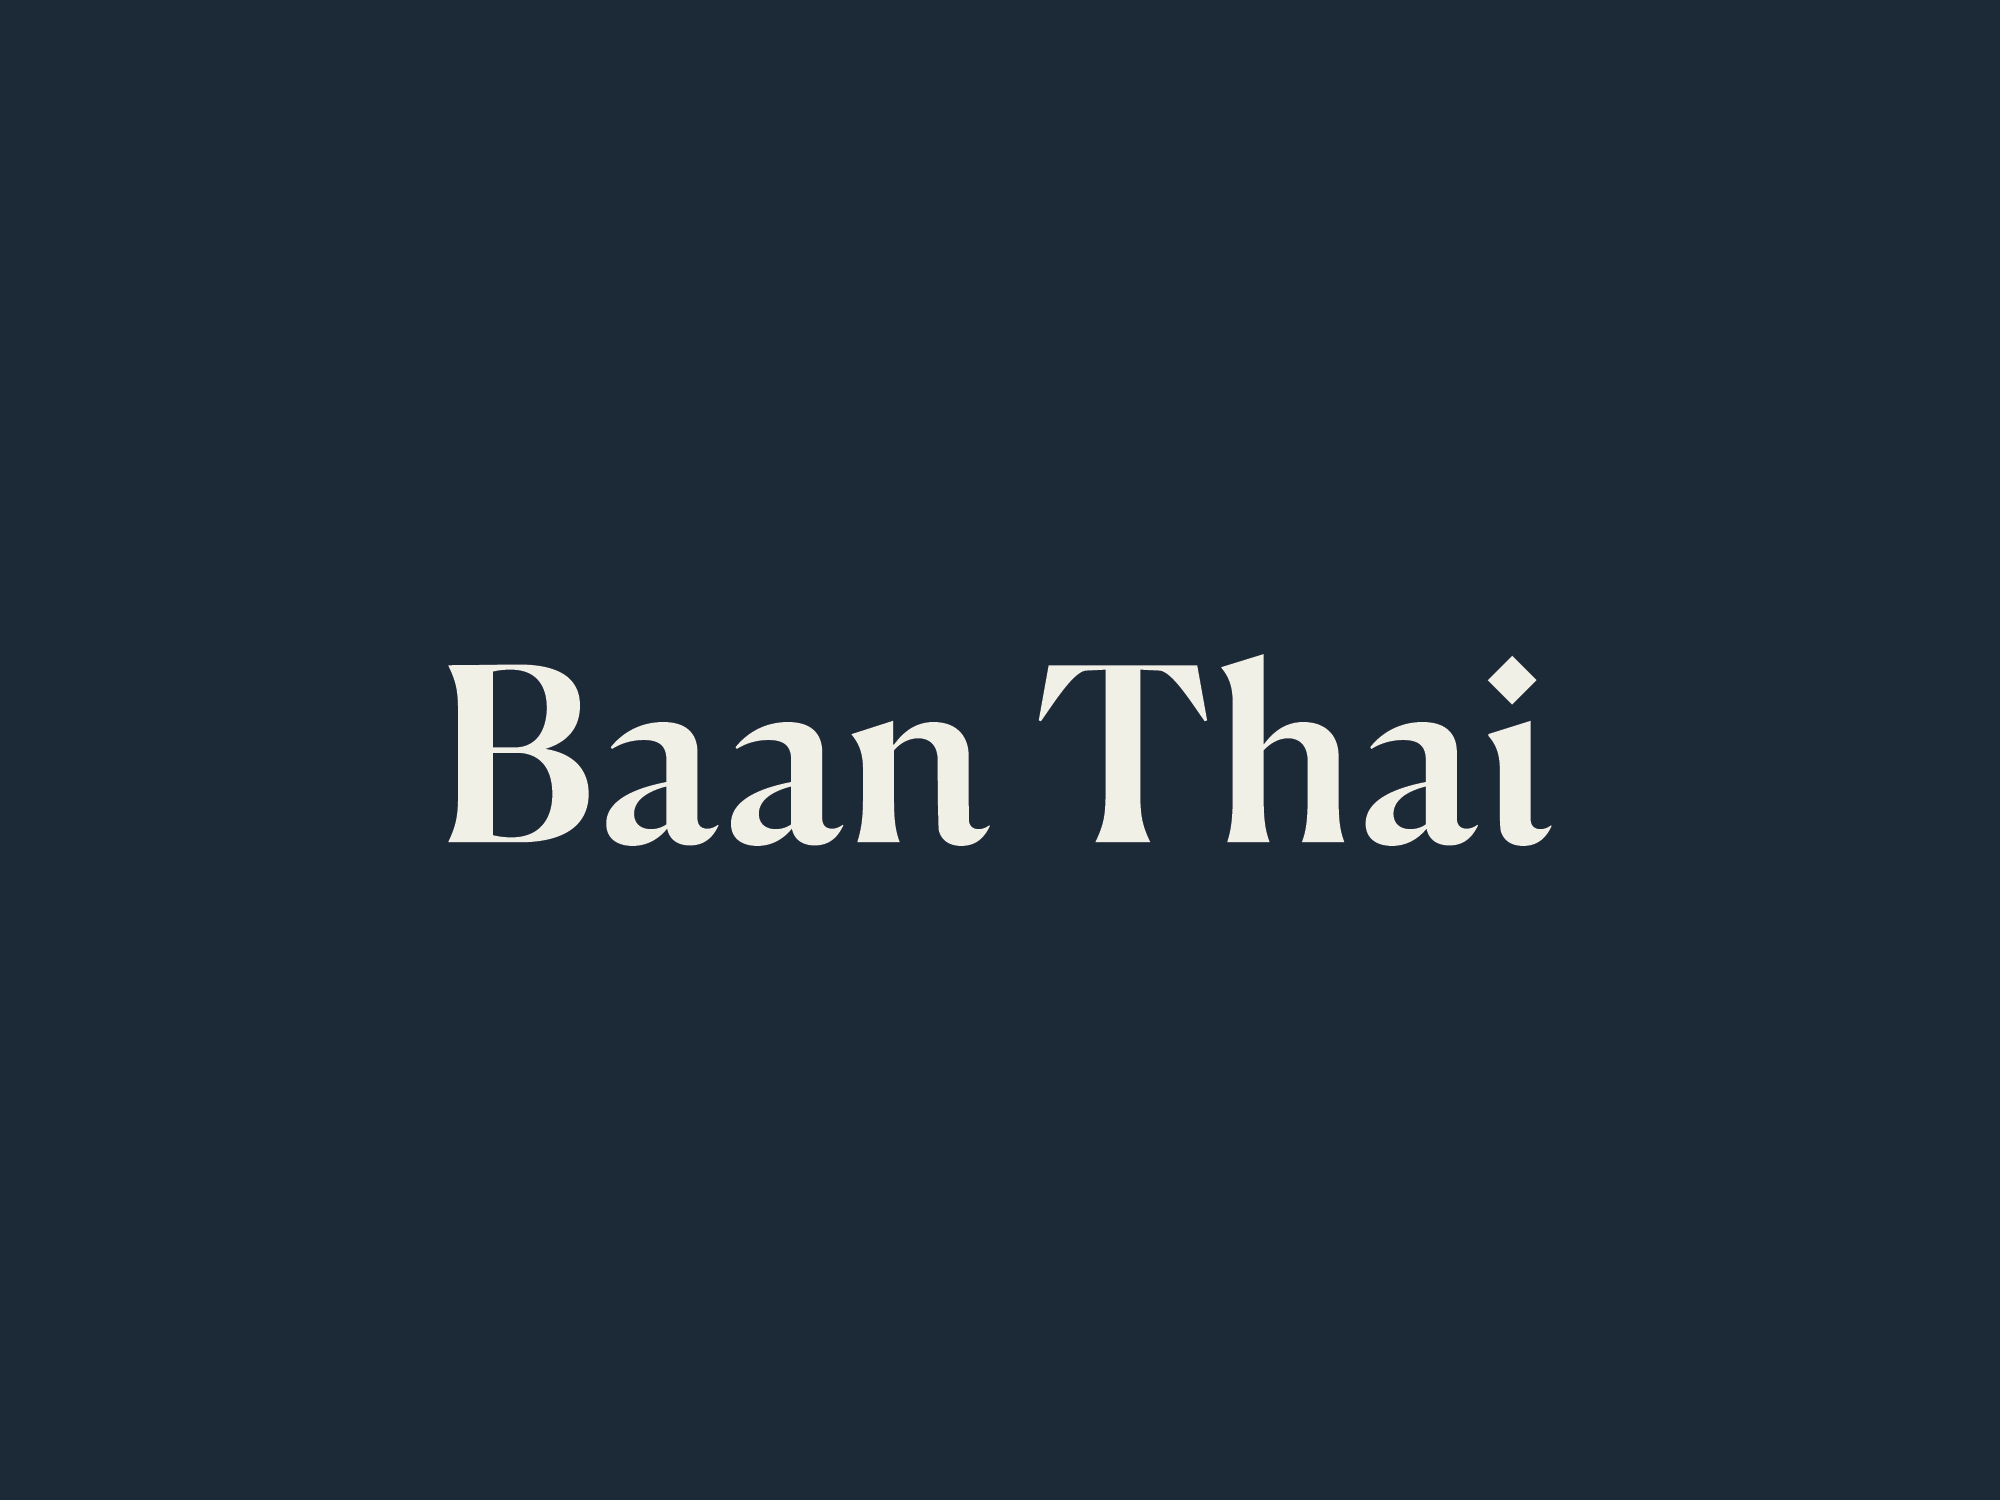 Cover image: Baan Thai, Identity